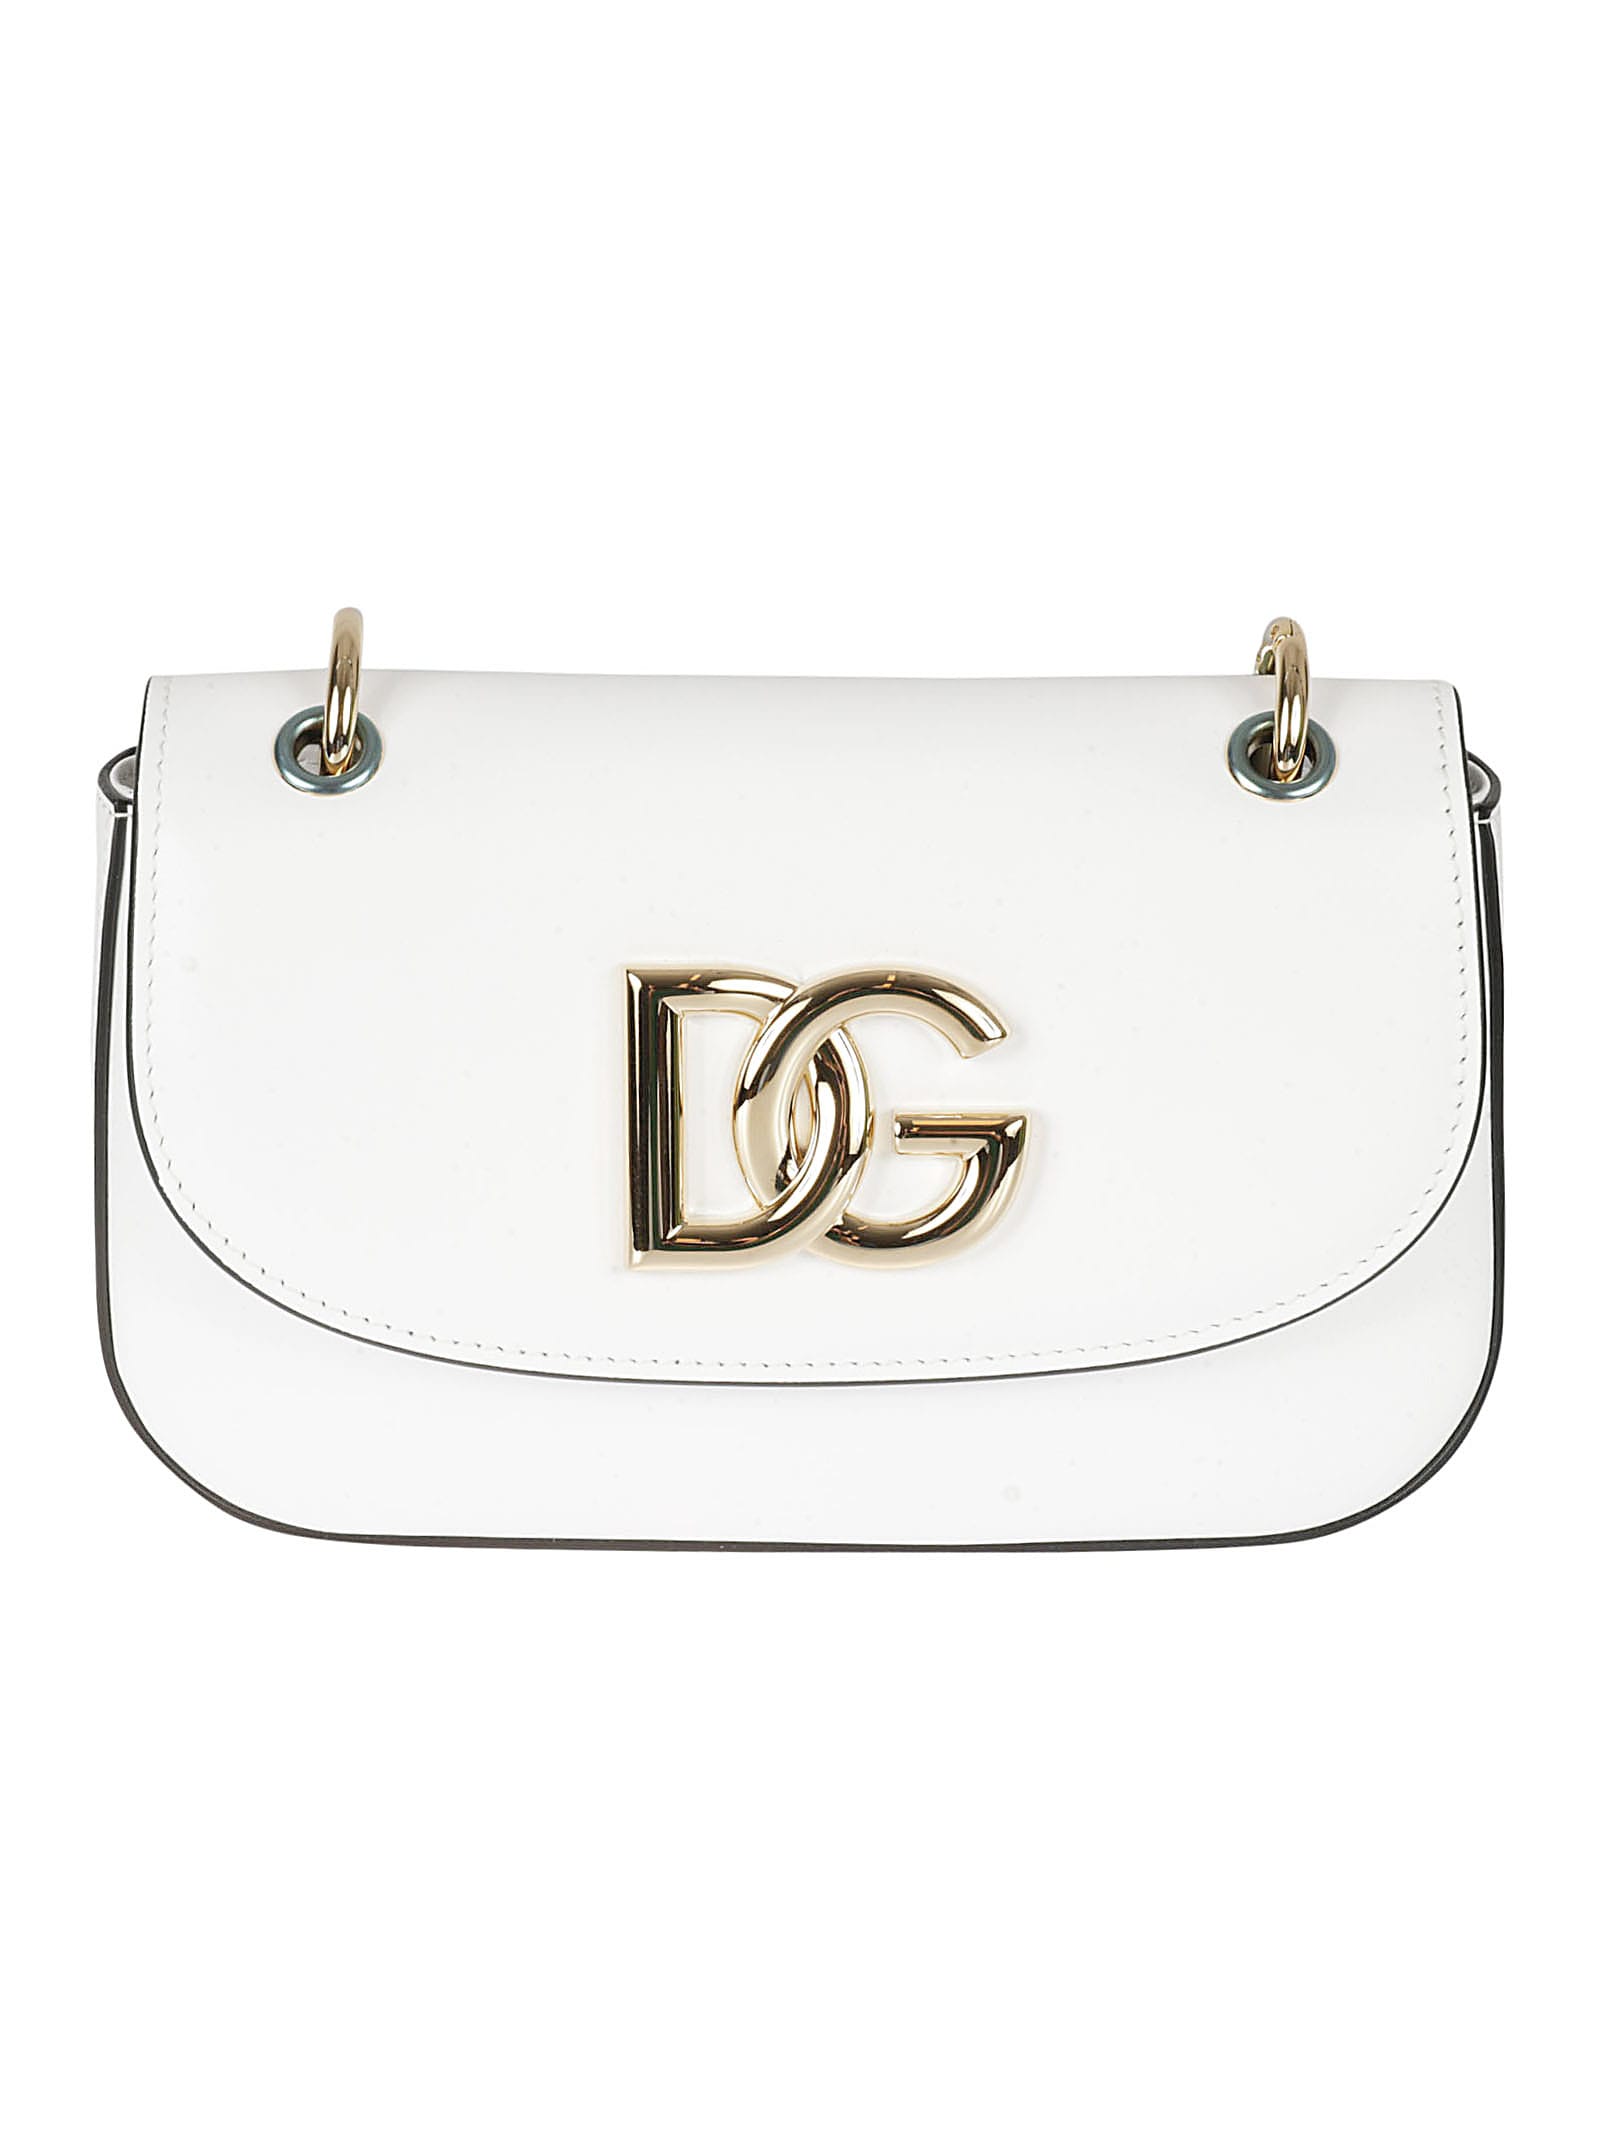 Dolce & Gabbana Dg Plaque Flap Shoulder Bag